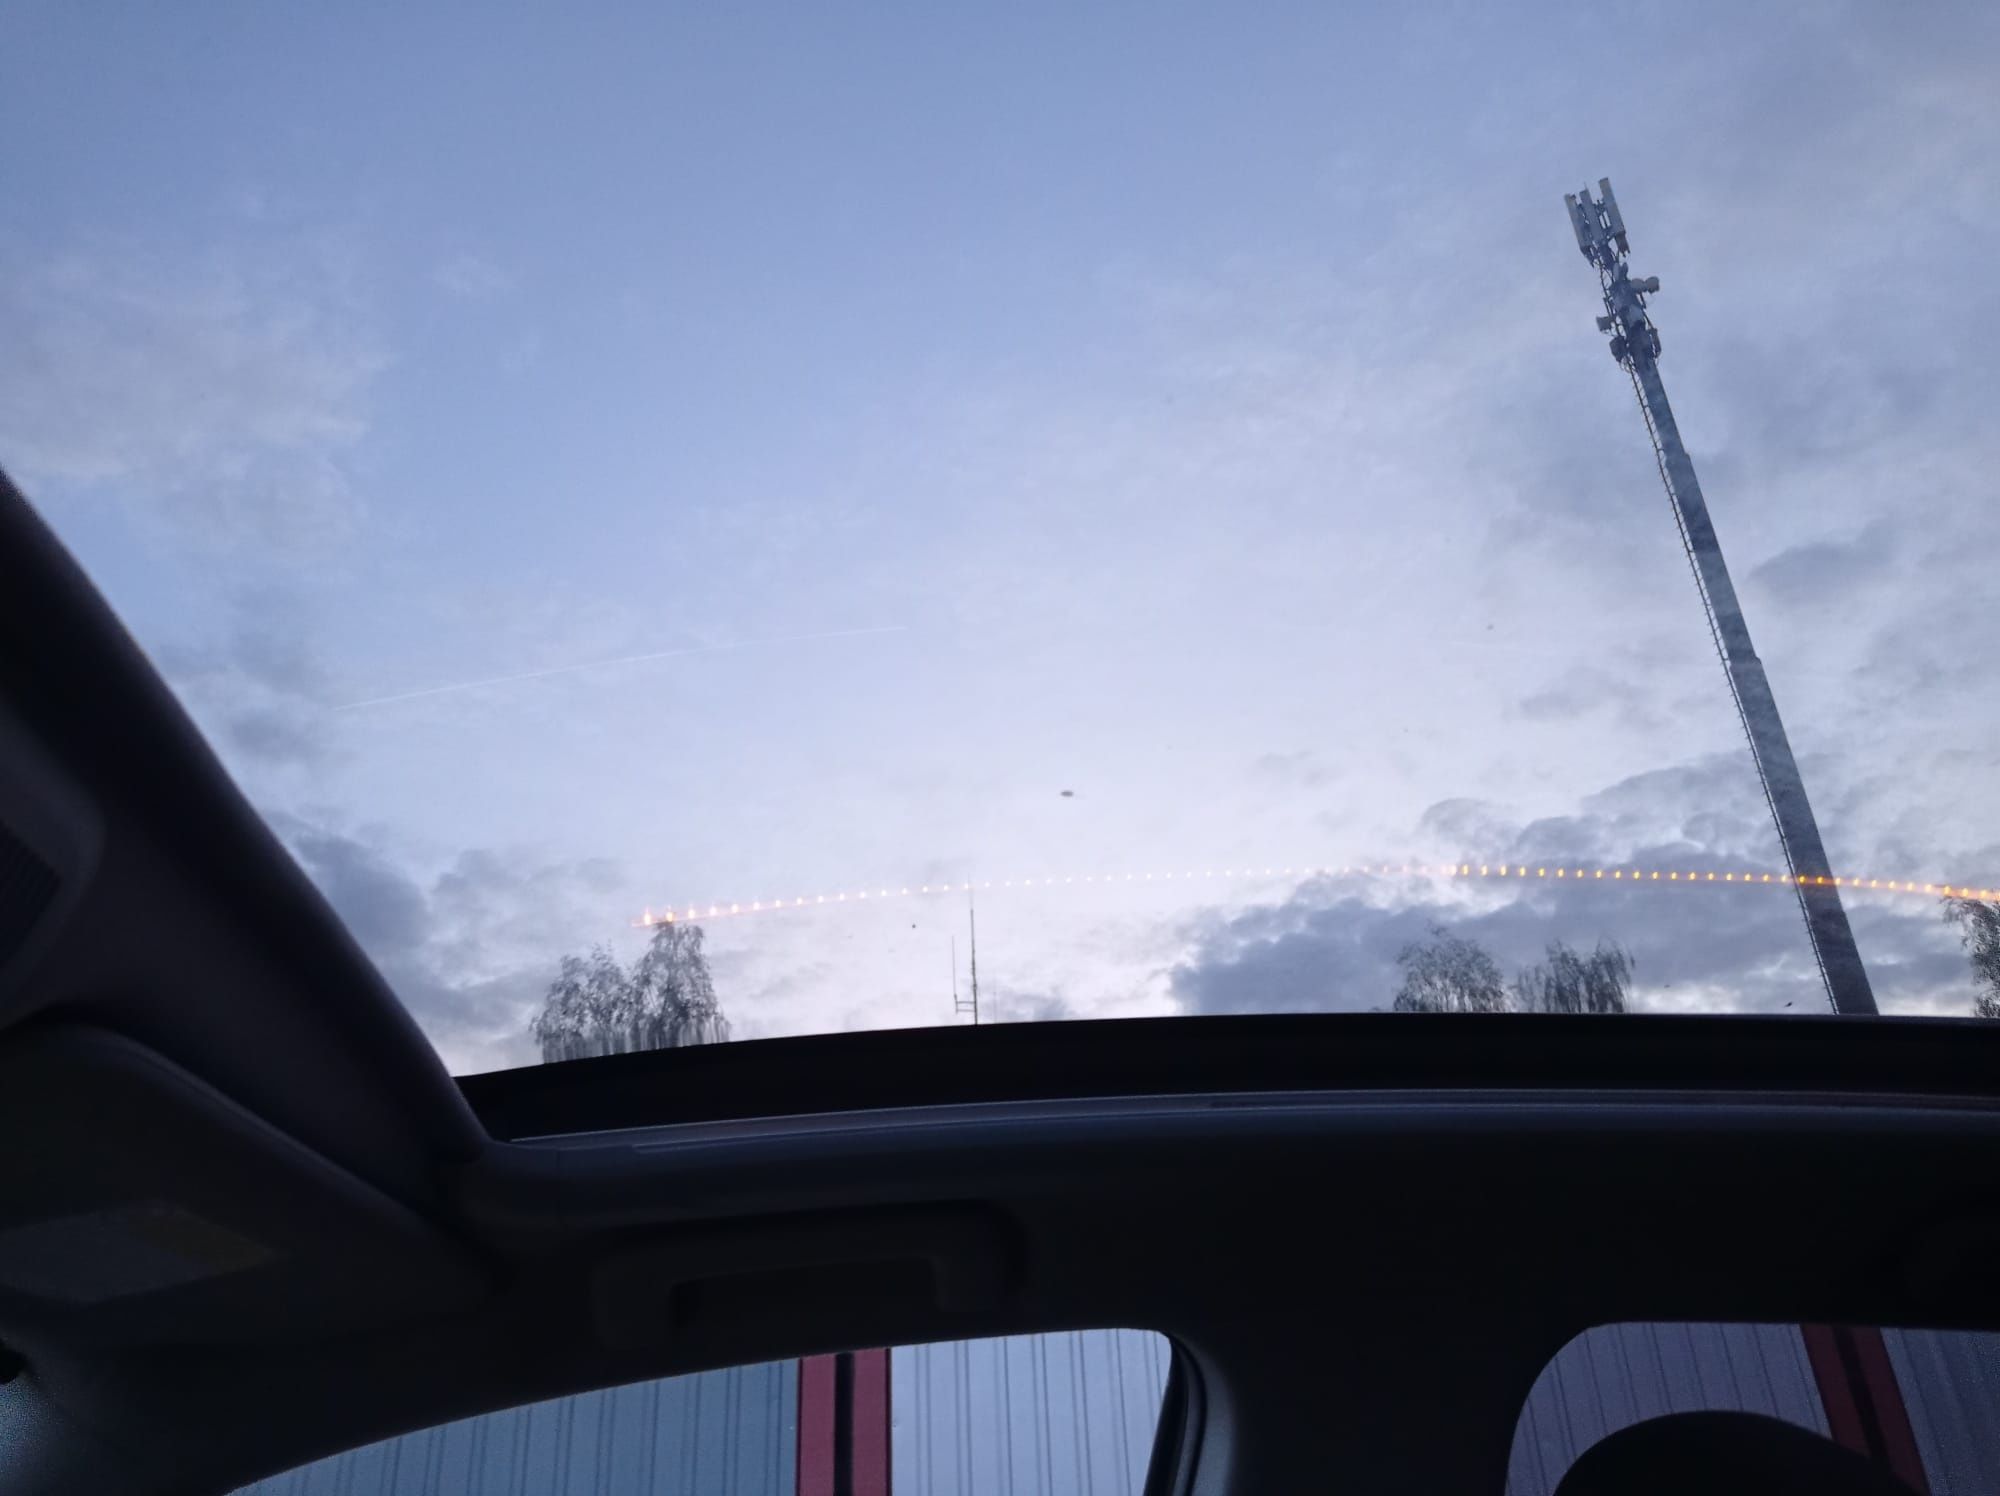 Mitsubishi ASX Benzyna+ LPG panorama, kamera cofania